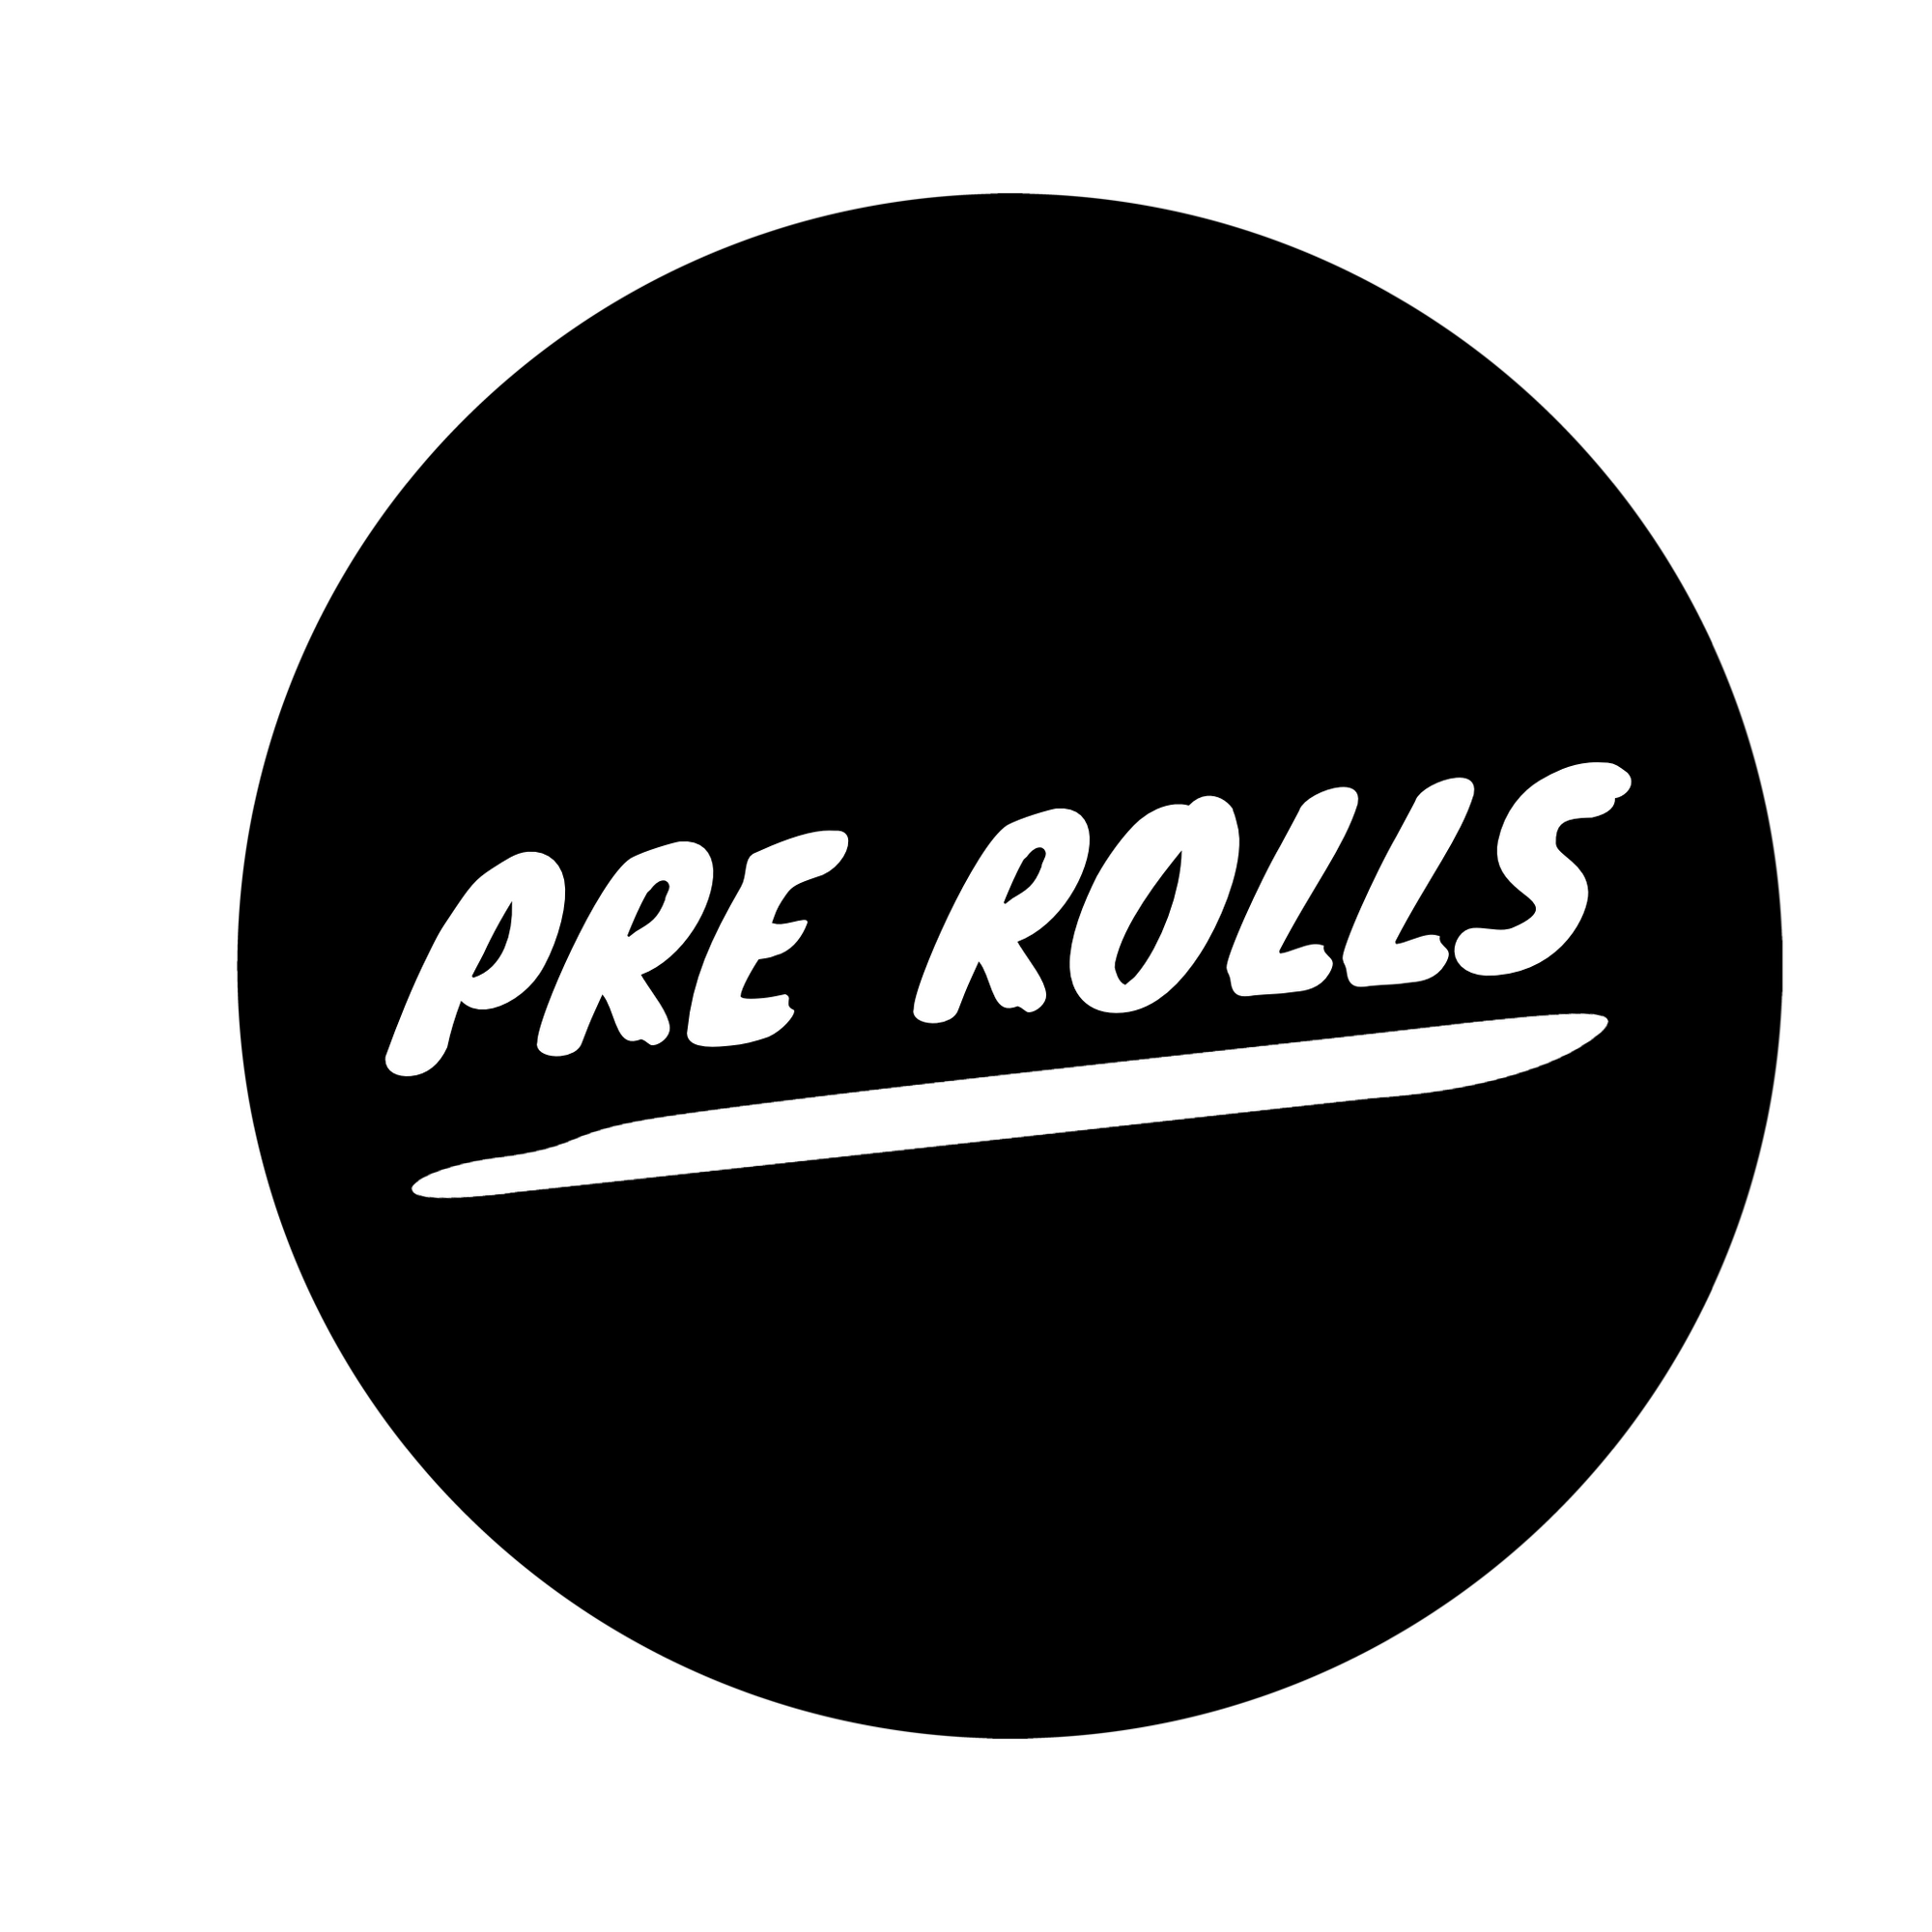 Pre rolls